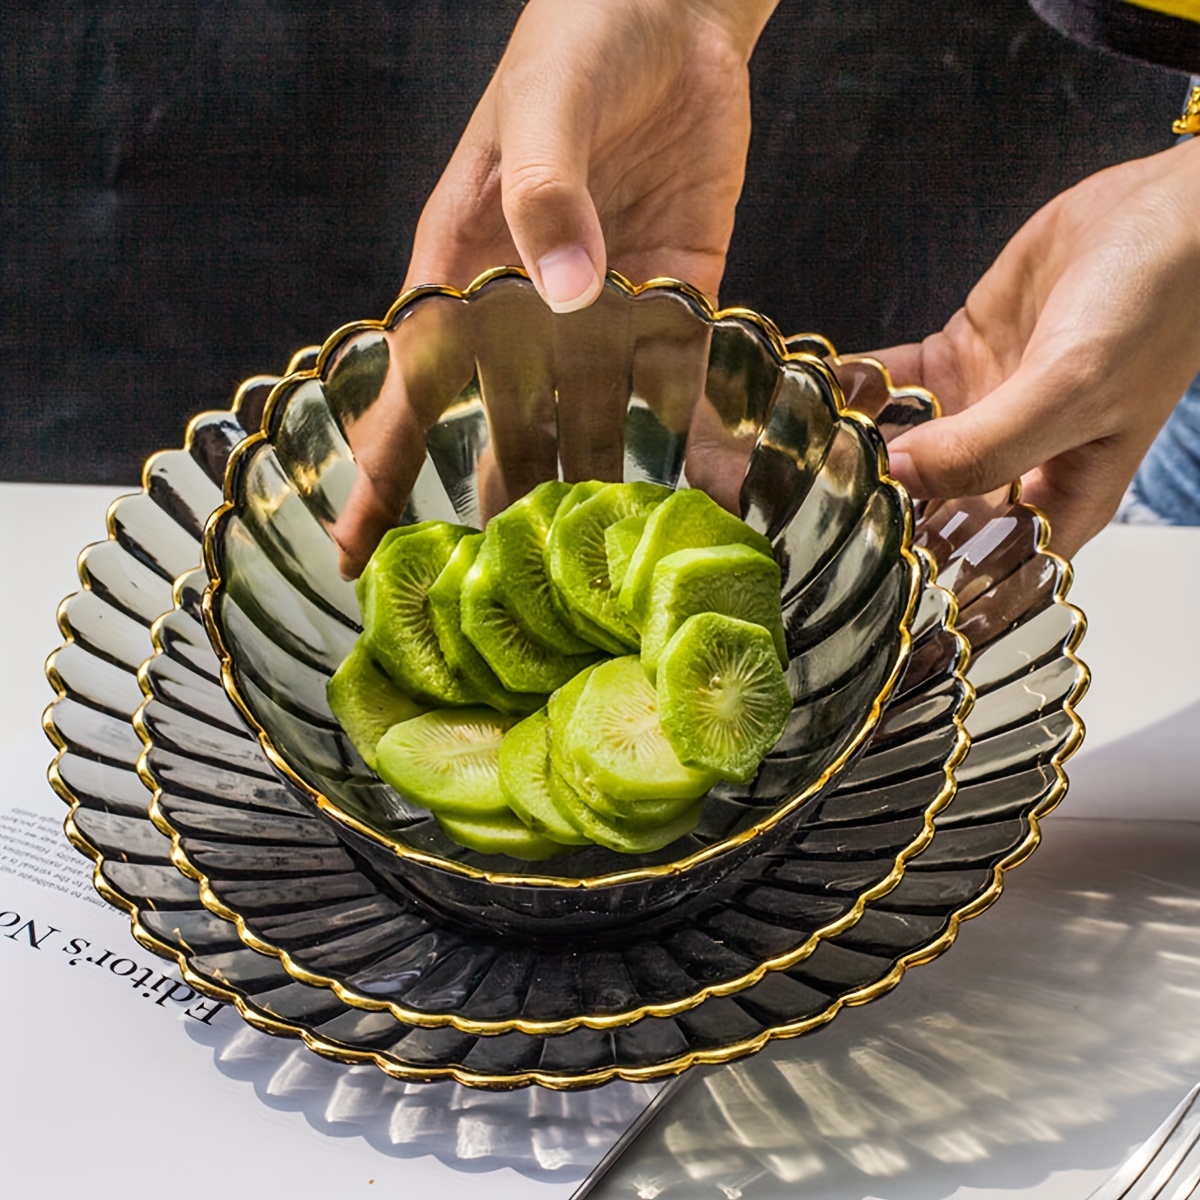 Golden Edge Glass Salad Bowl - Transparent Tableware For